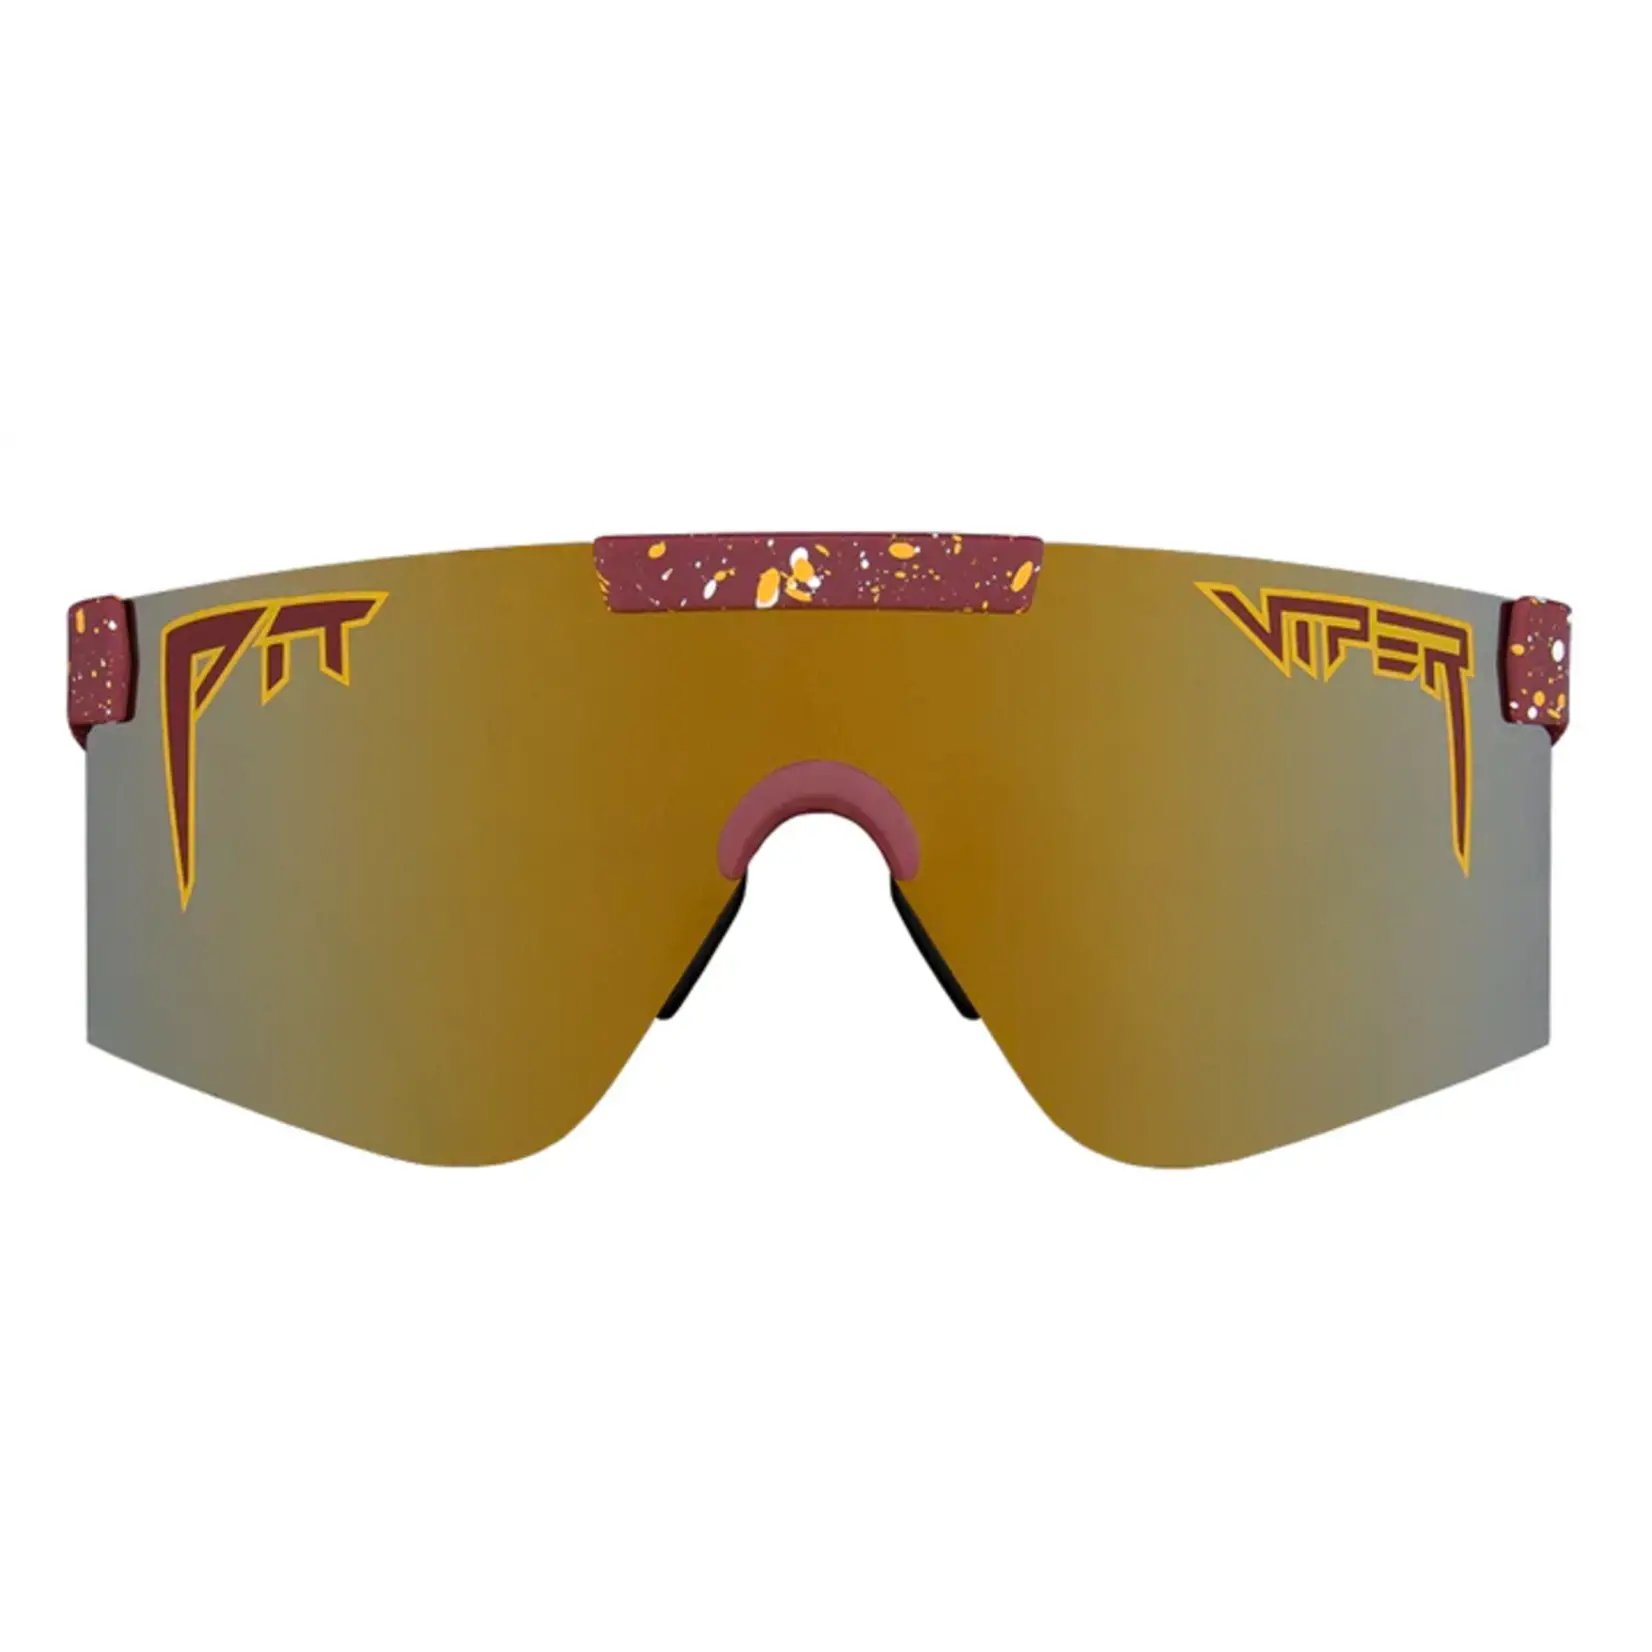 Pit Viper Pit Viper The 2000s Sun Glasses